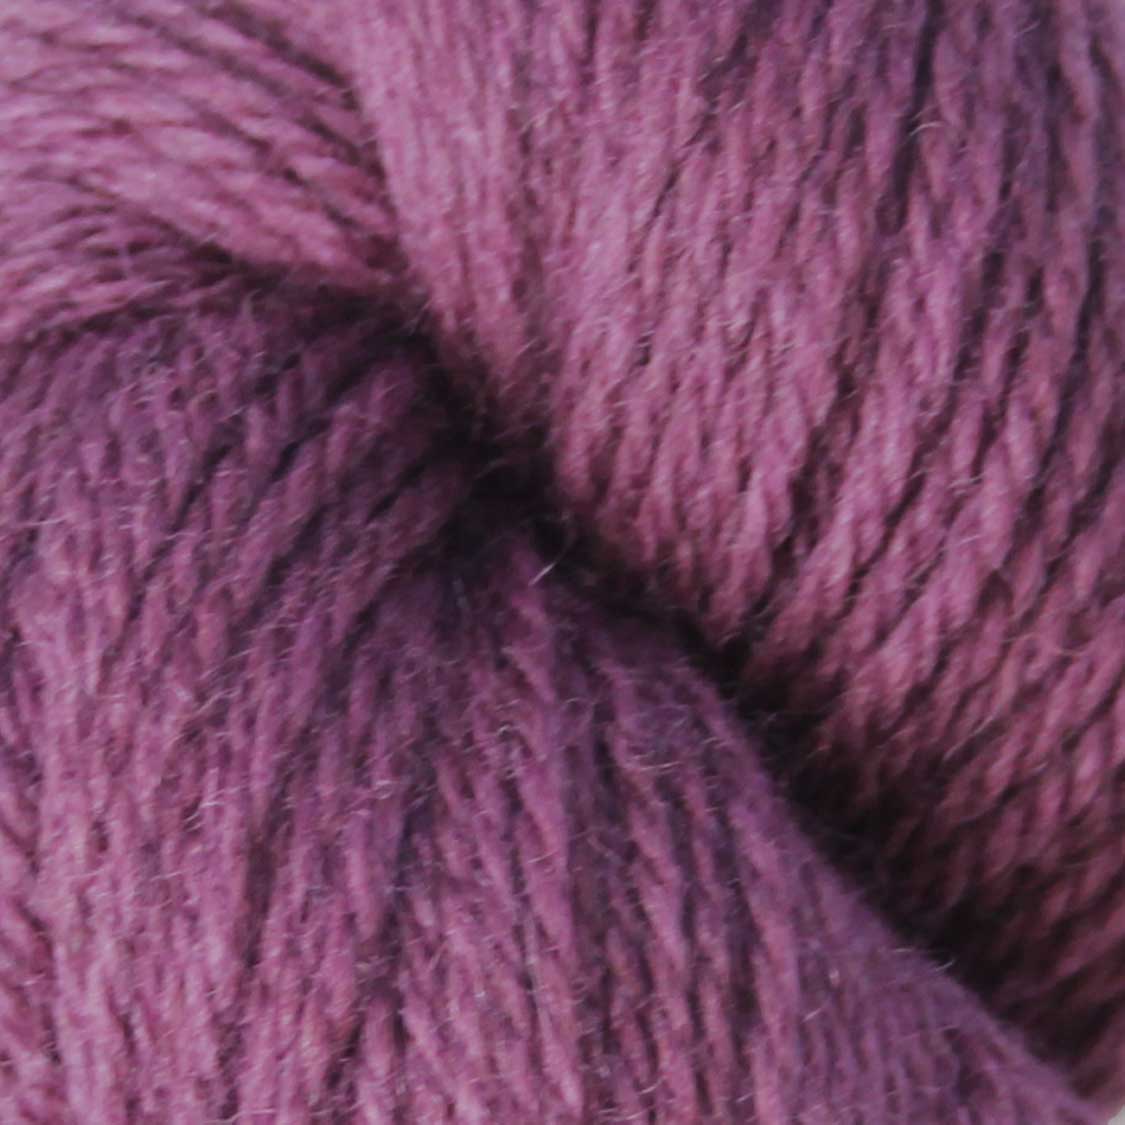 Woodnote Aran: 34% Bluefaced Leicester, 33% Masham, 33% Merino Hand Knitting Wool 100g Hank